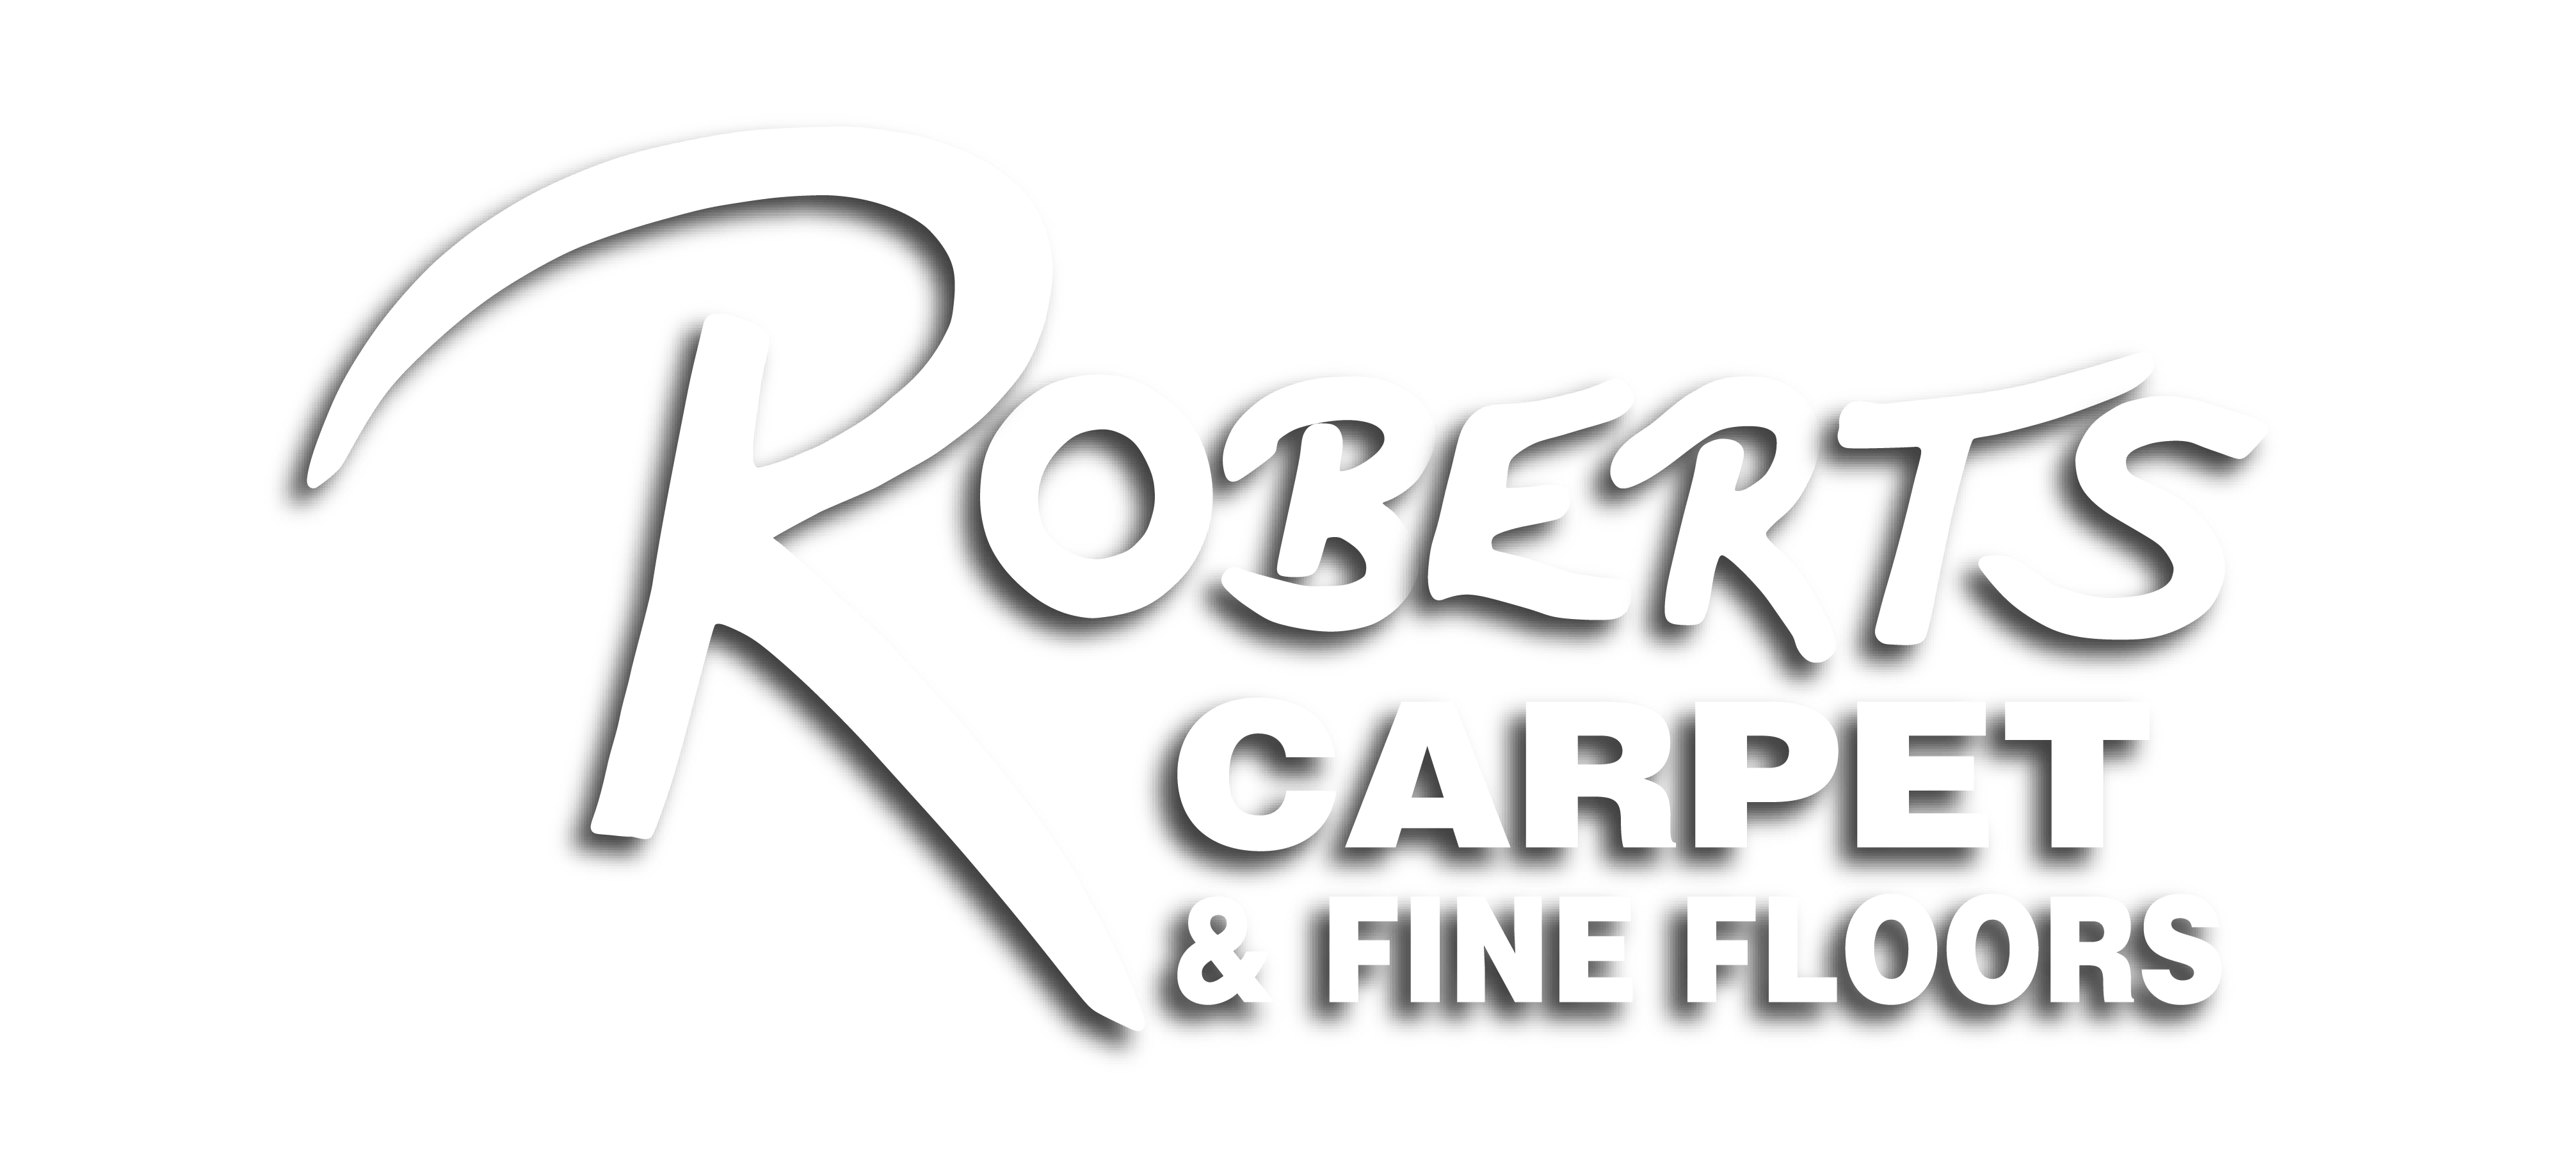 Roberts carpet and fine floors | Roberts Carpet & Fine Floors